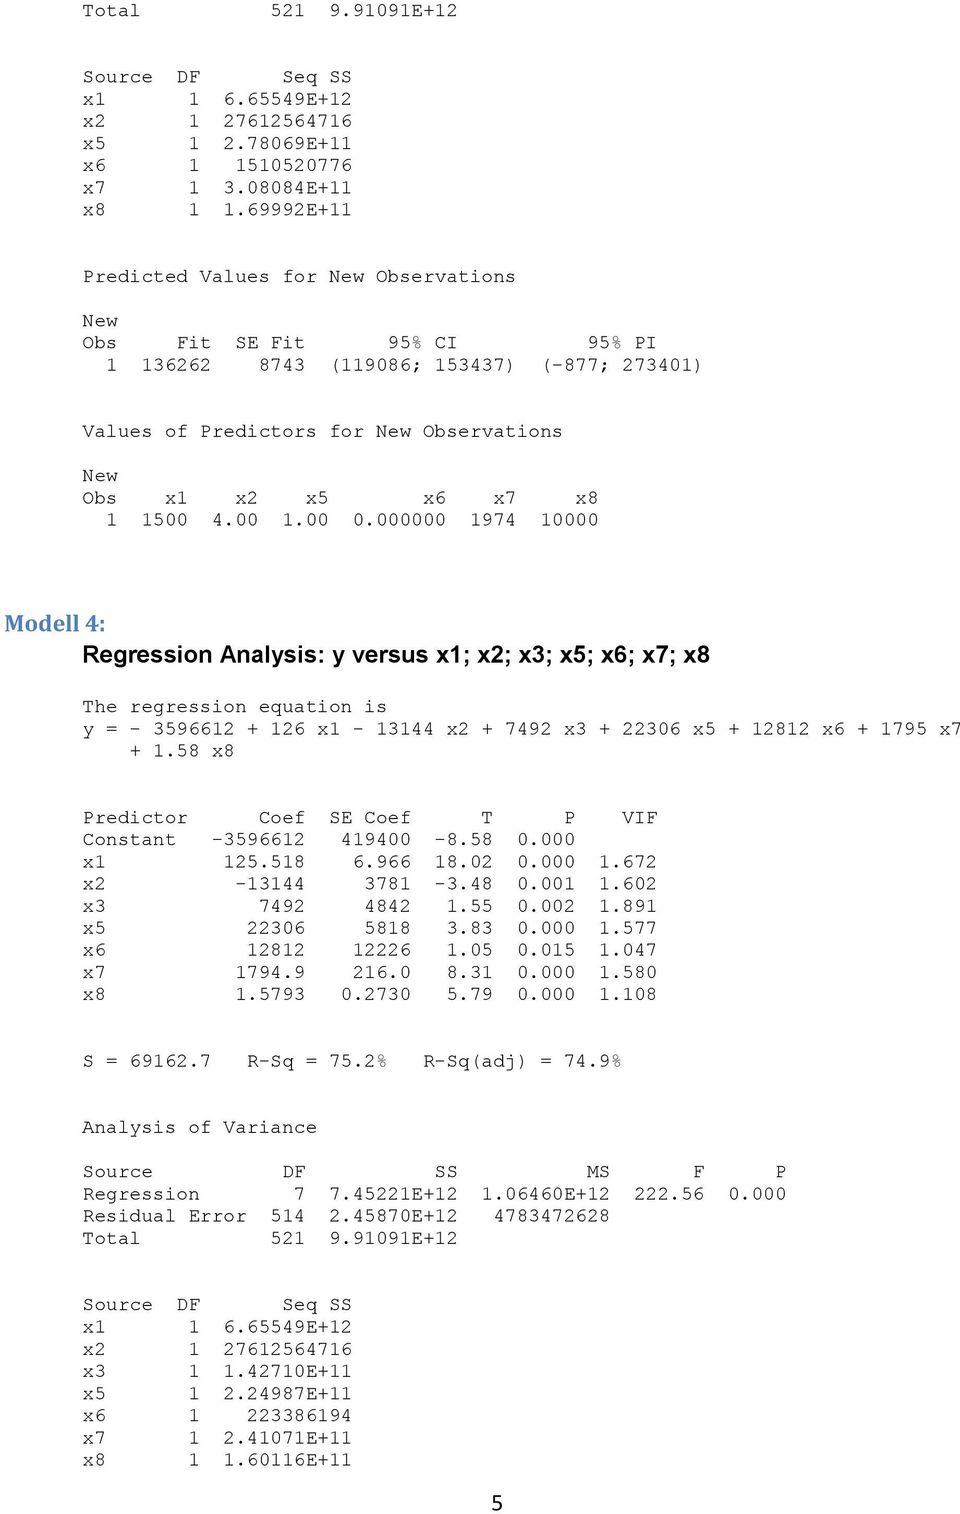 000000 1974 10000 Modell 4: Regression Analysis: y versus x1; x2; x3; x5; x6; x7; x8 The regression equation is y = - 3596612 + 126 x1-13144 x2 + 7492 x3 + 22306 x5 + 12812 x6 + 1795 x7 + 1.